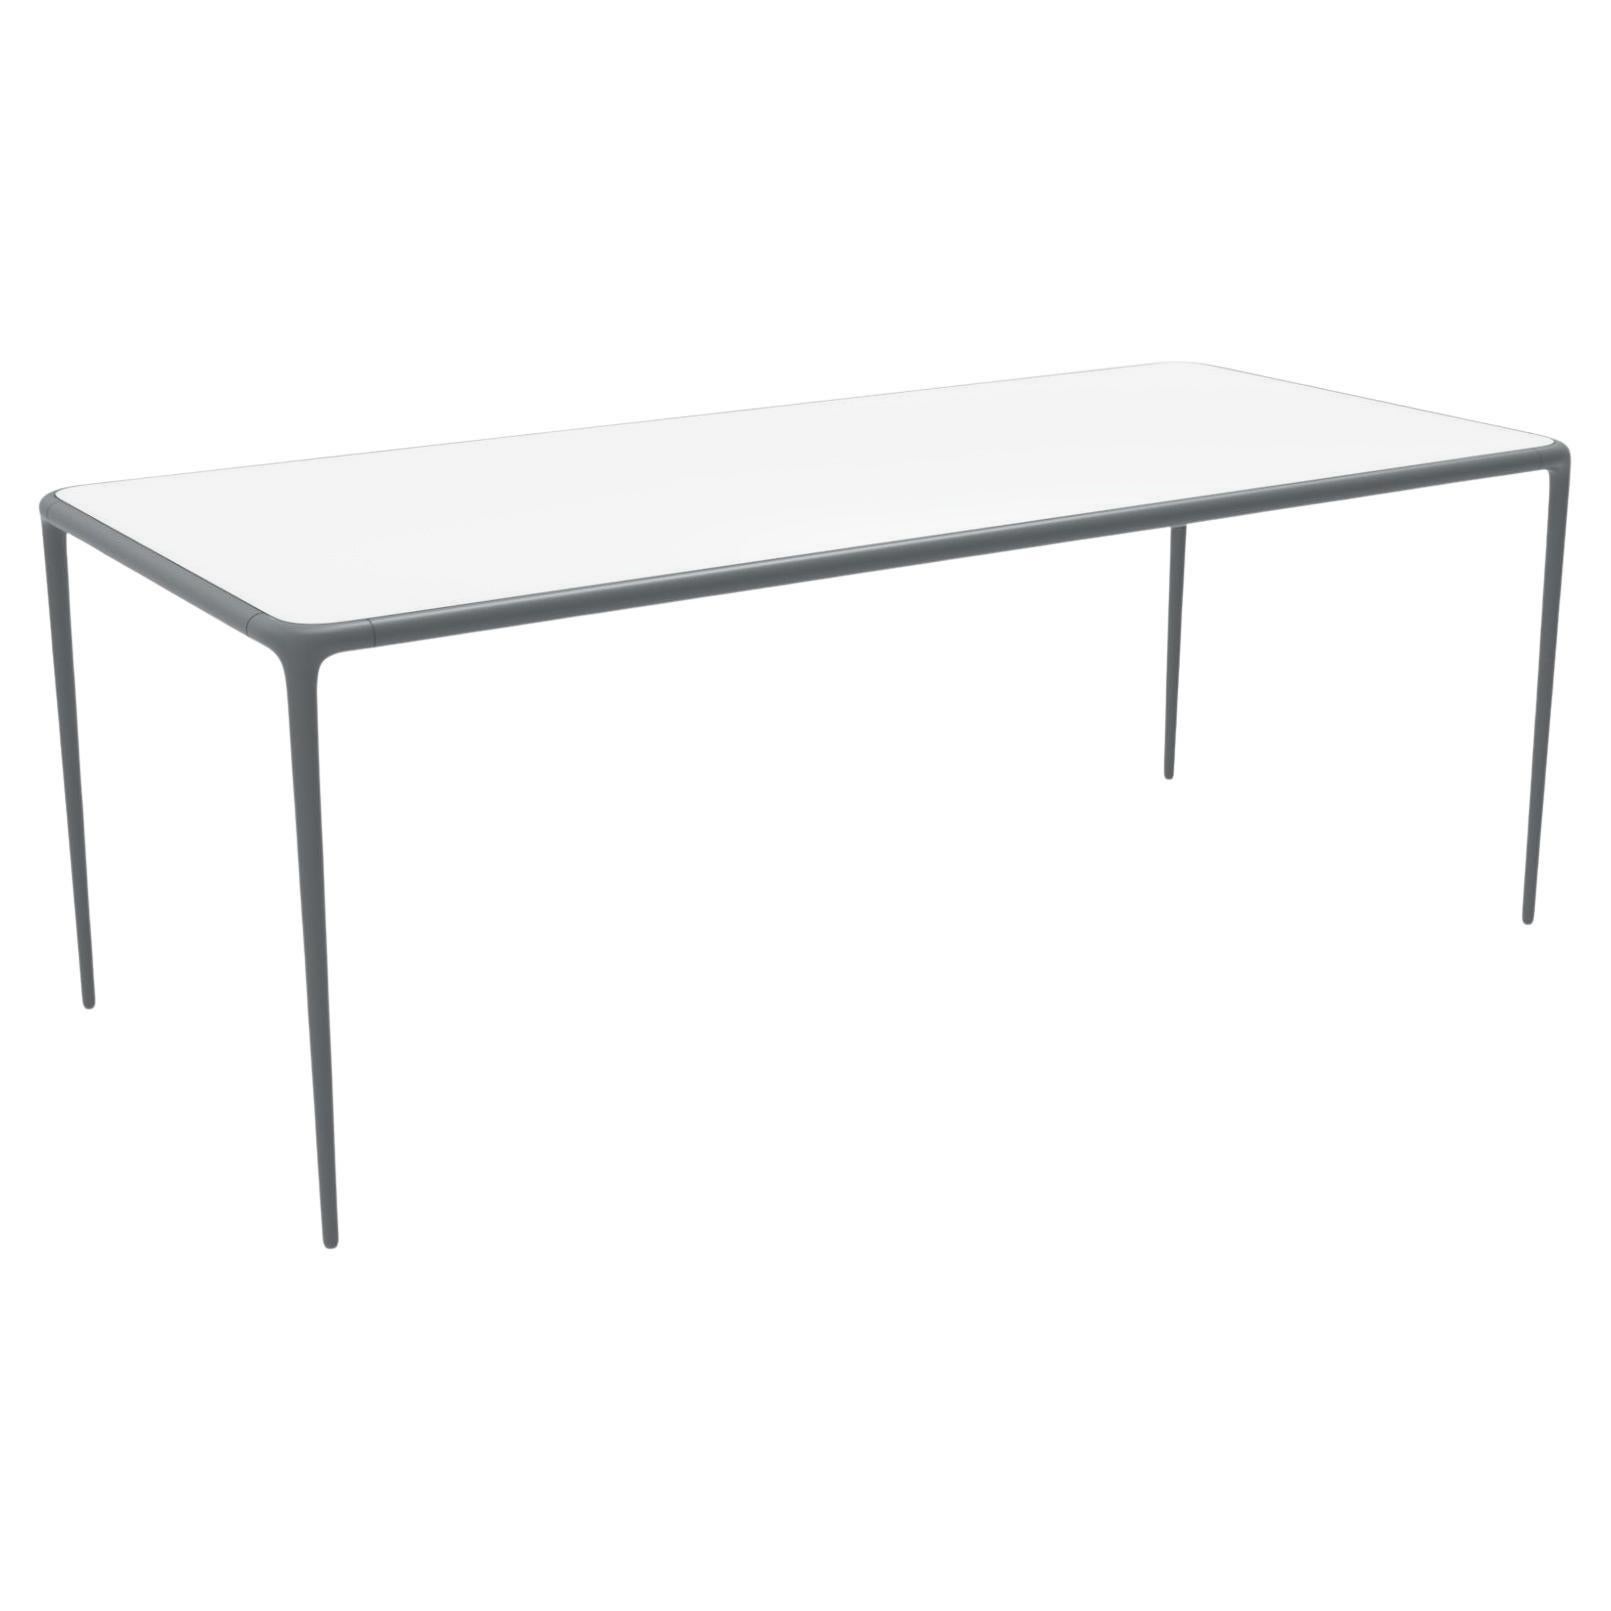 Xaloc Grey Glass Top Table 200 by Mowee